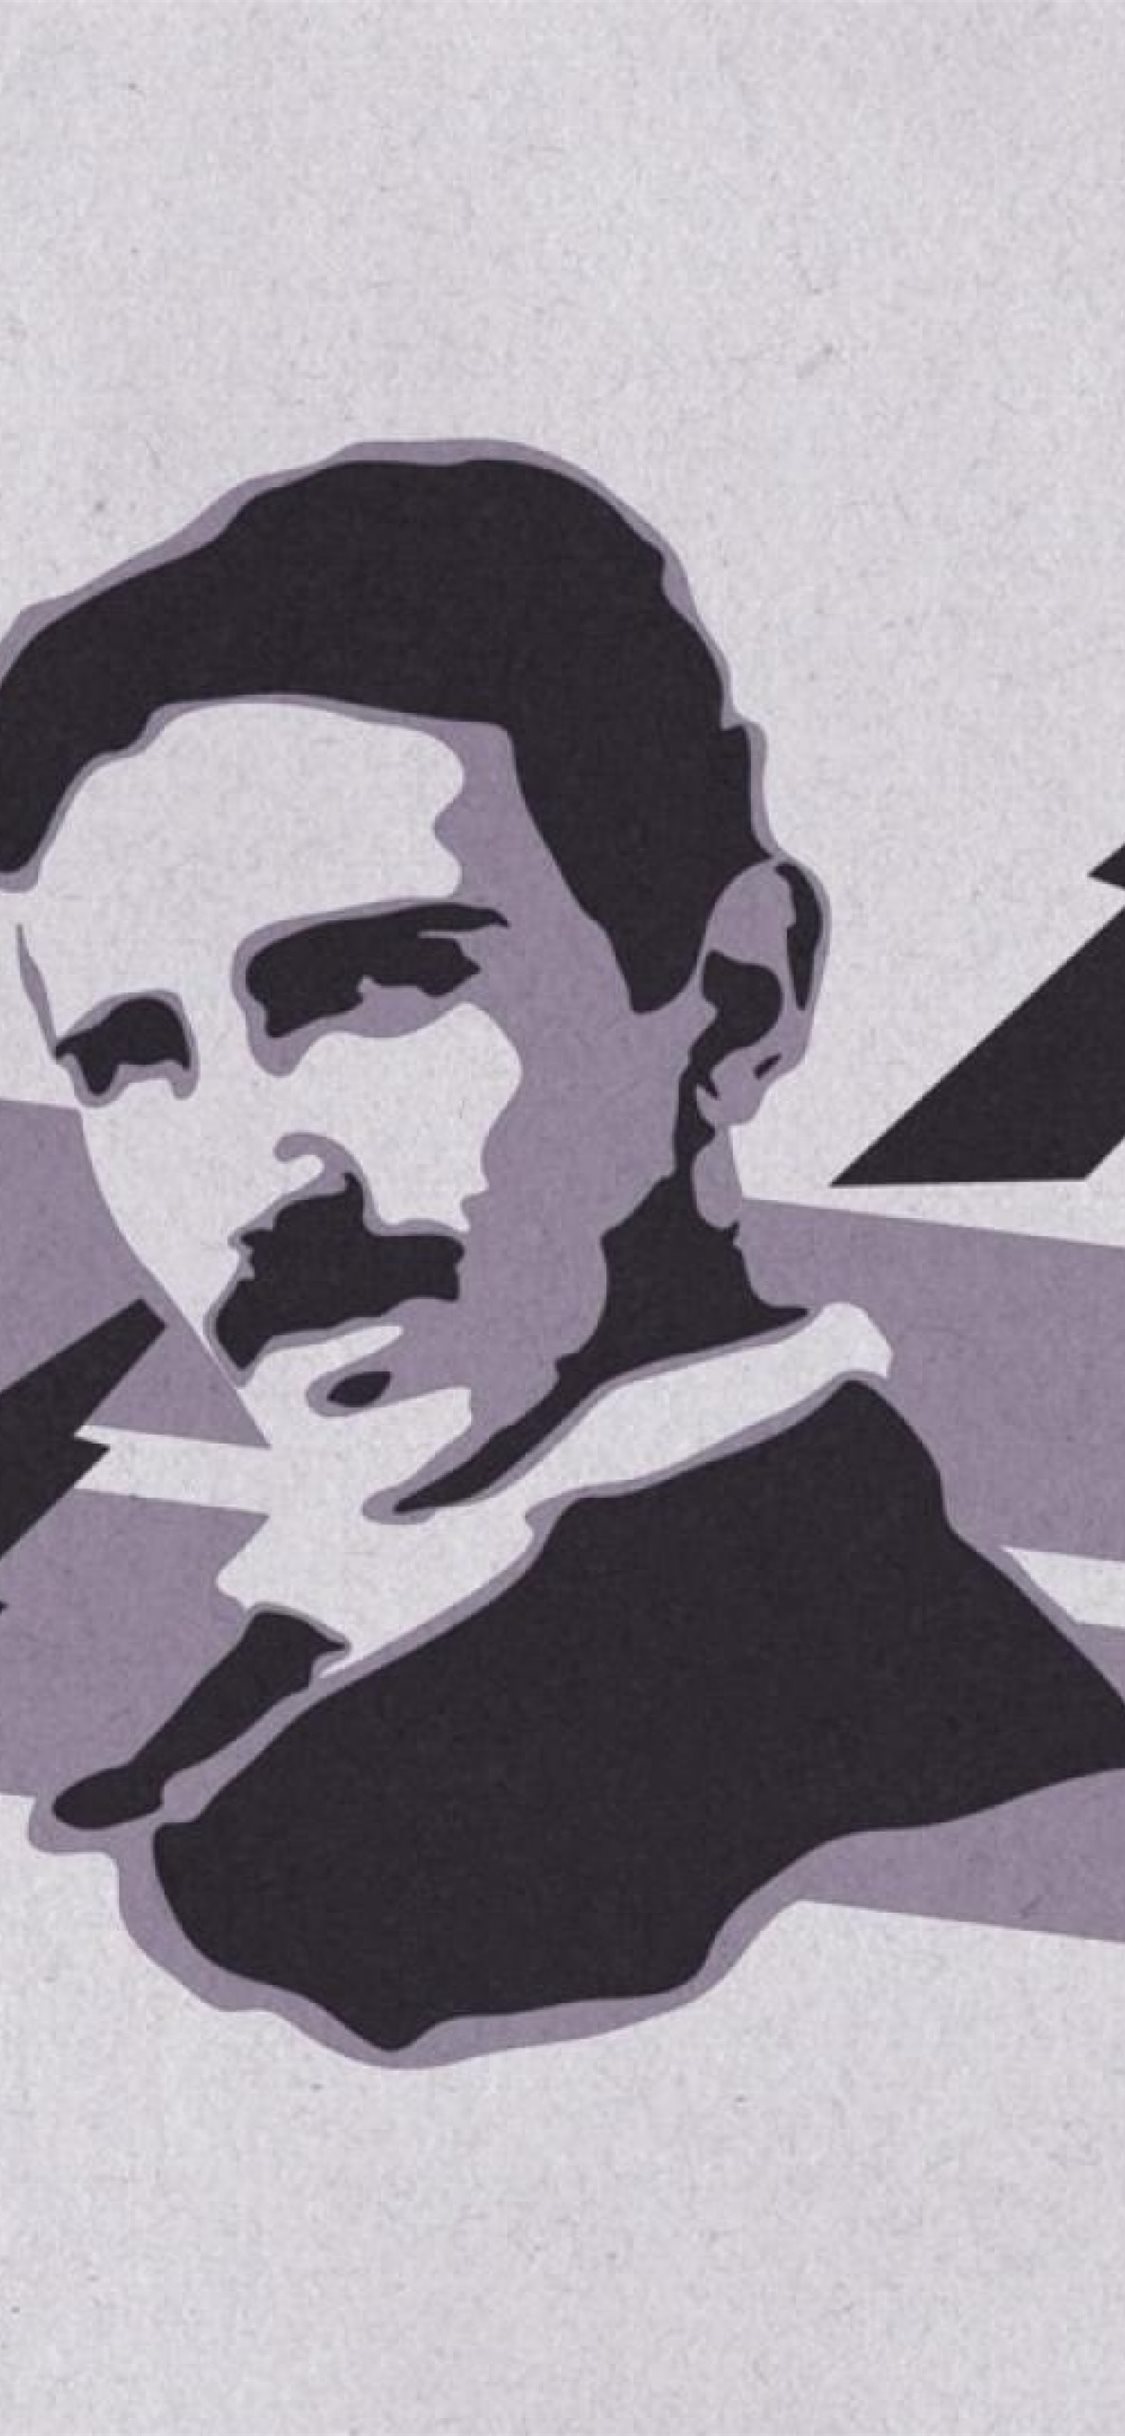 Nikola Tesla for Google Nexus 10 Maiden iPhone Wallpaper Free Download